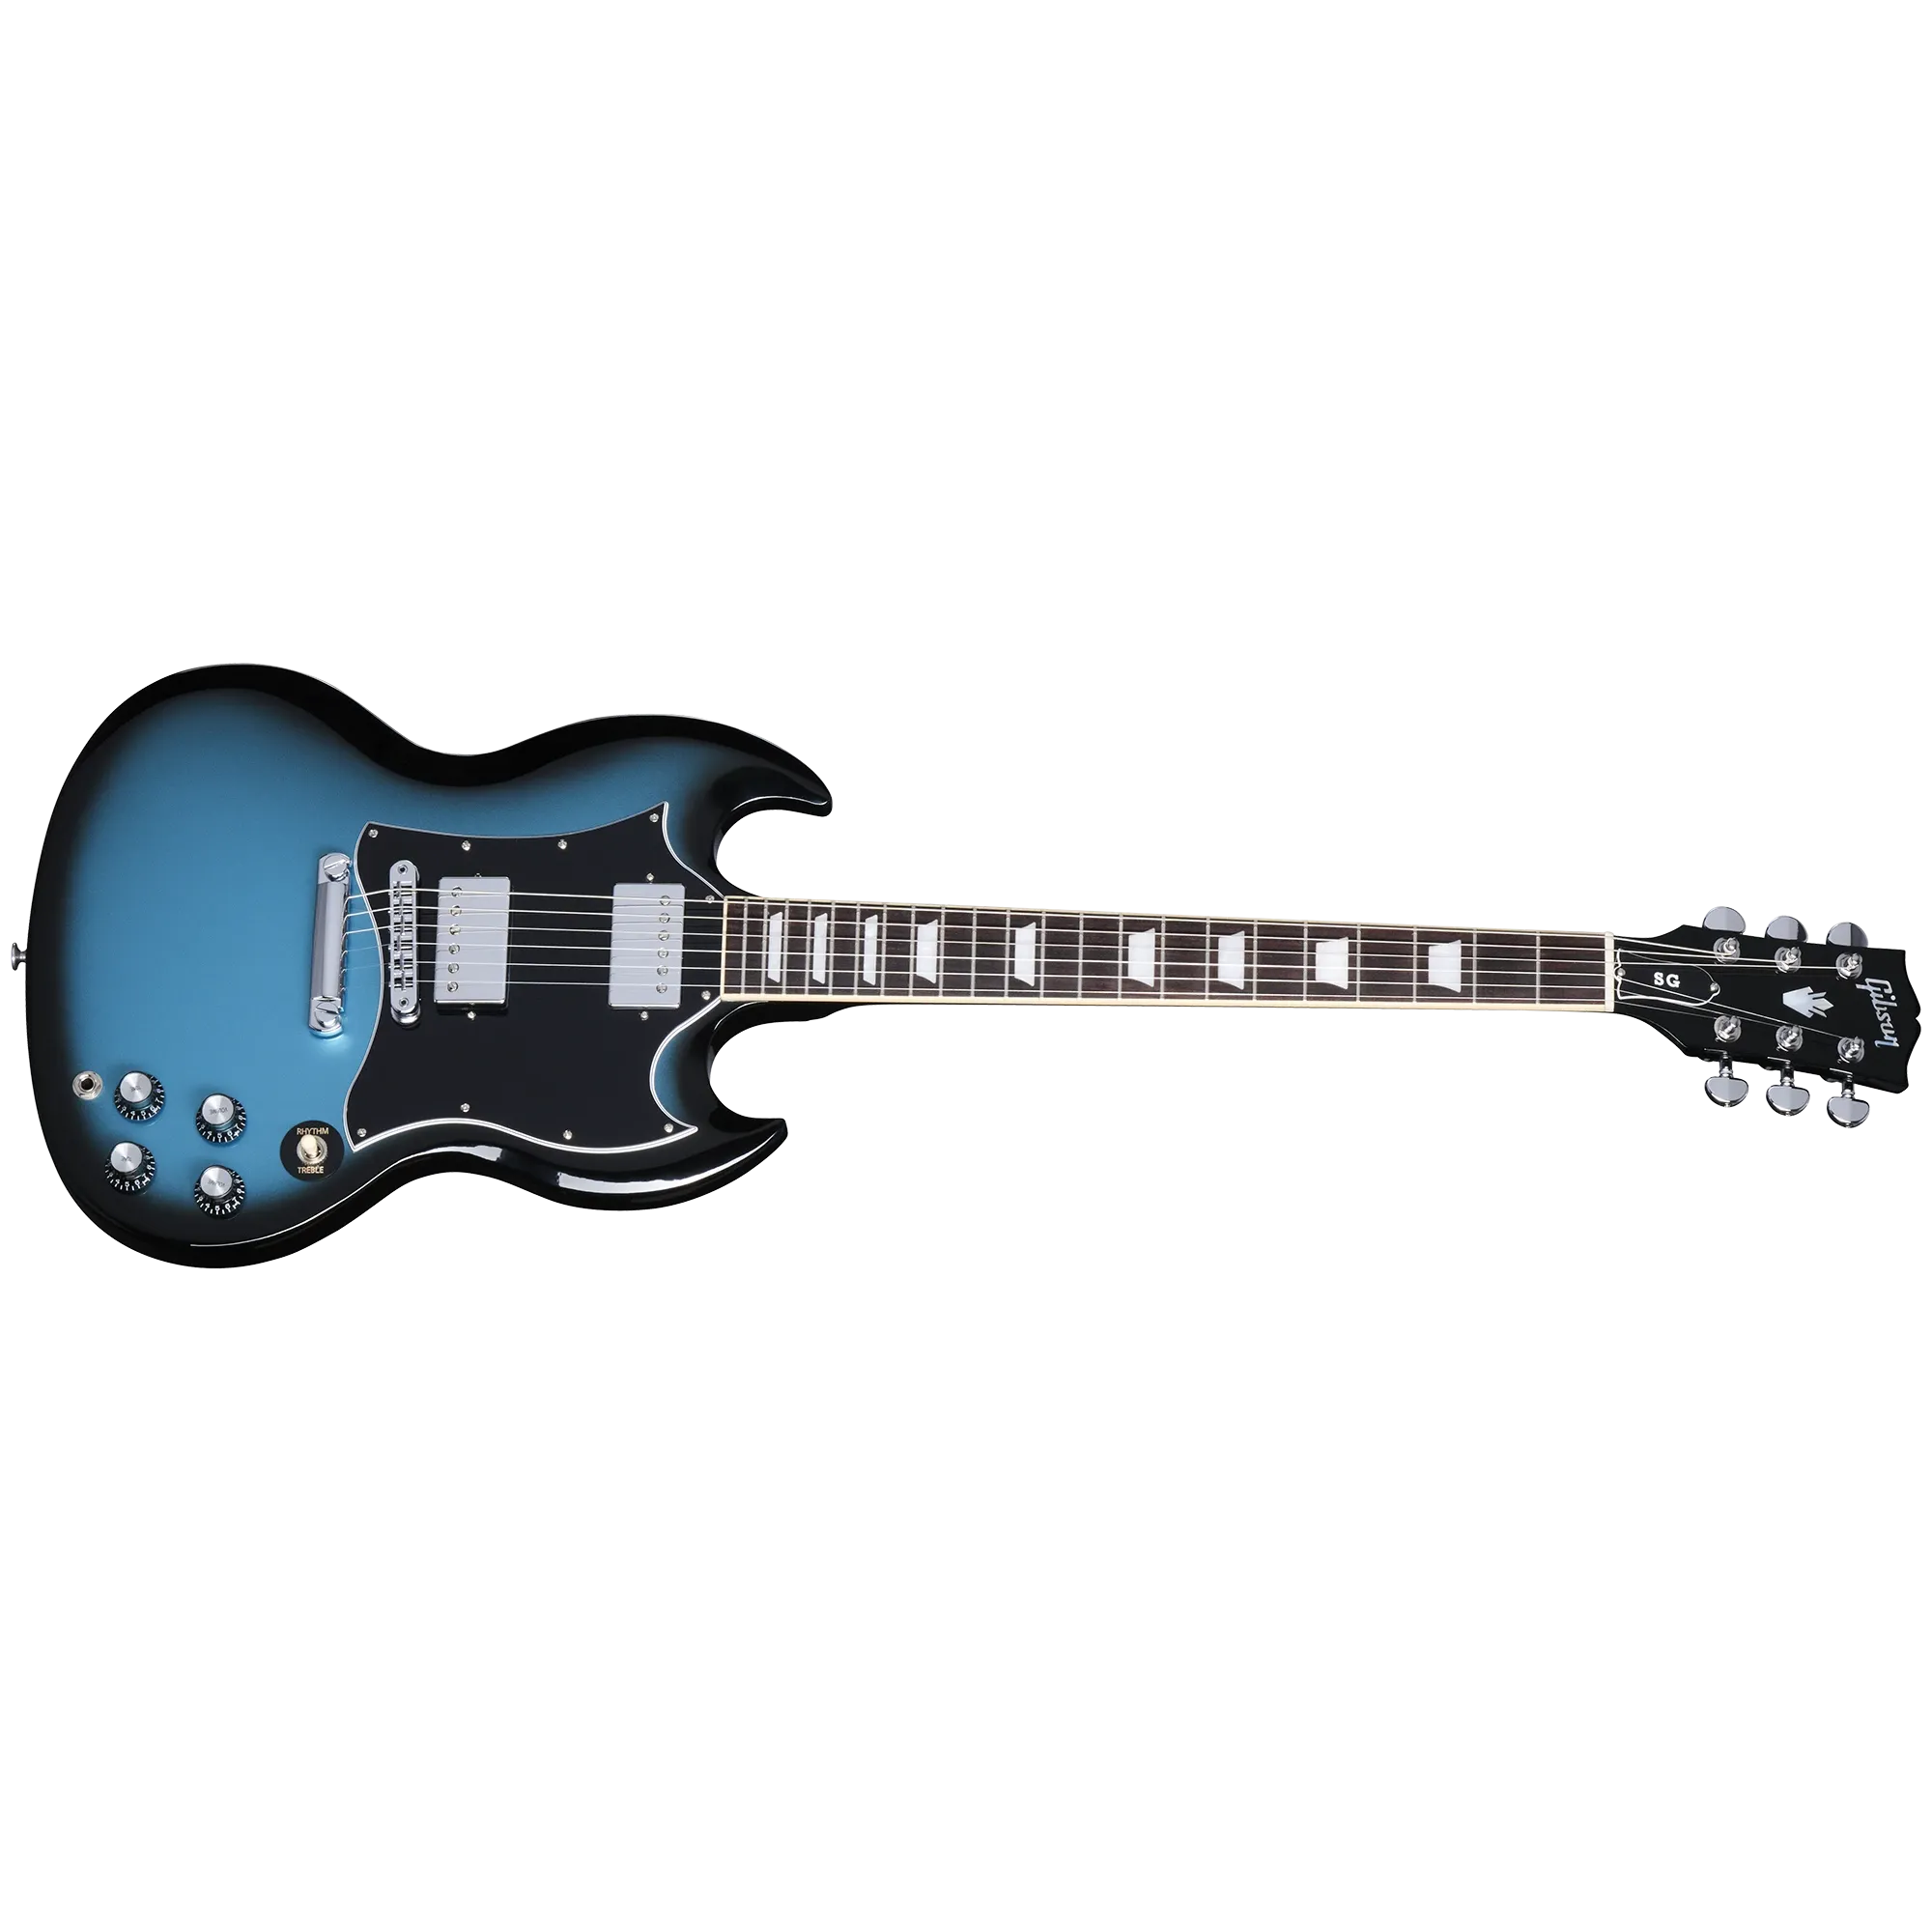 Gibson SG Standard pelham blue burst